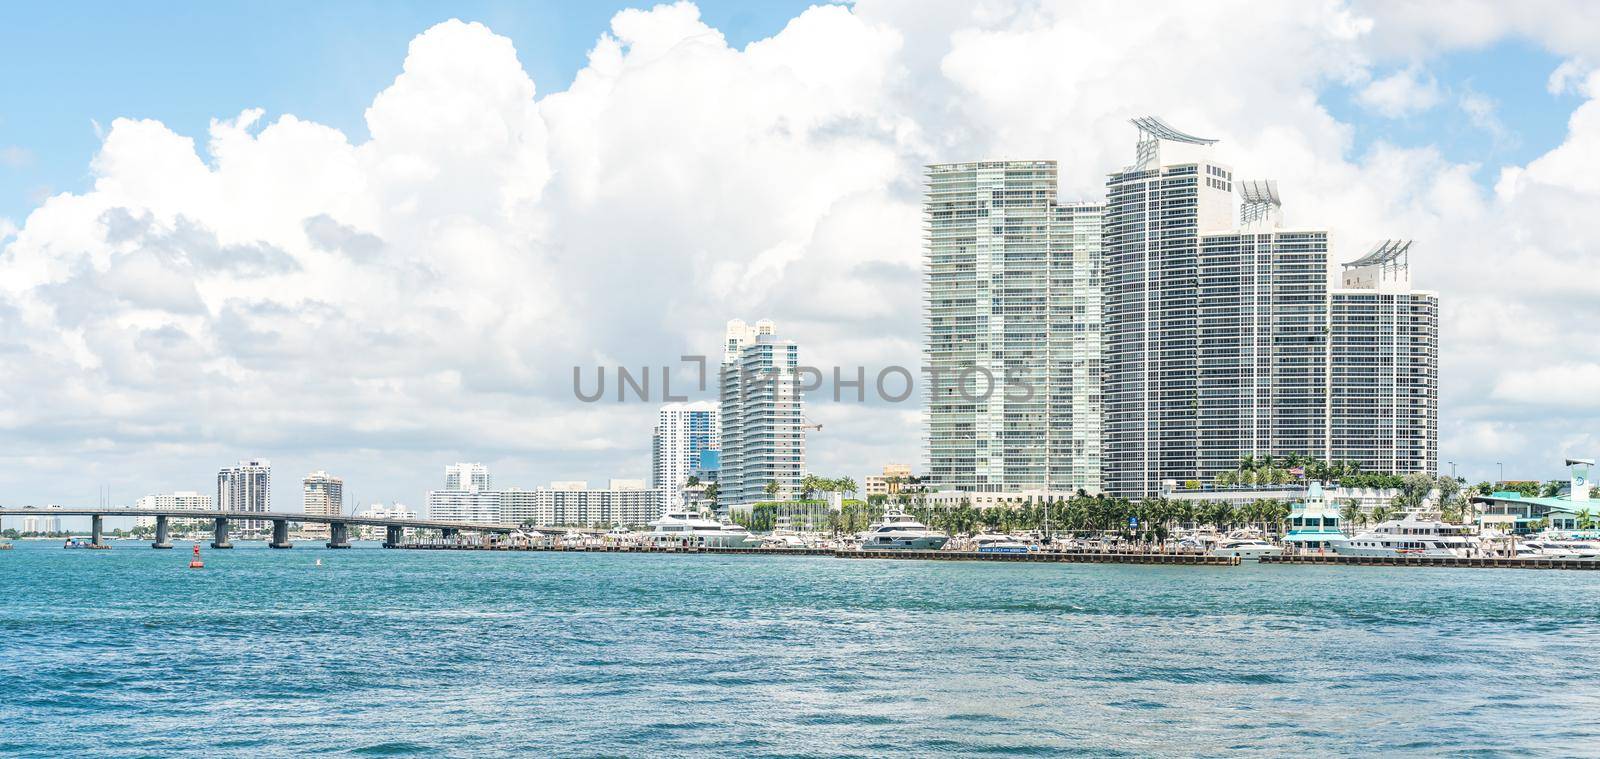 Miami, USA - September 11, 2019: Miami skyline with skyscrapers and bridge over the sea